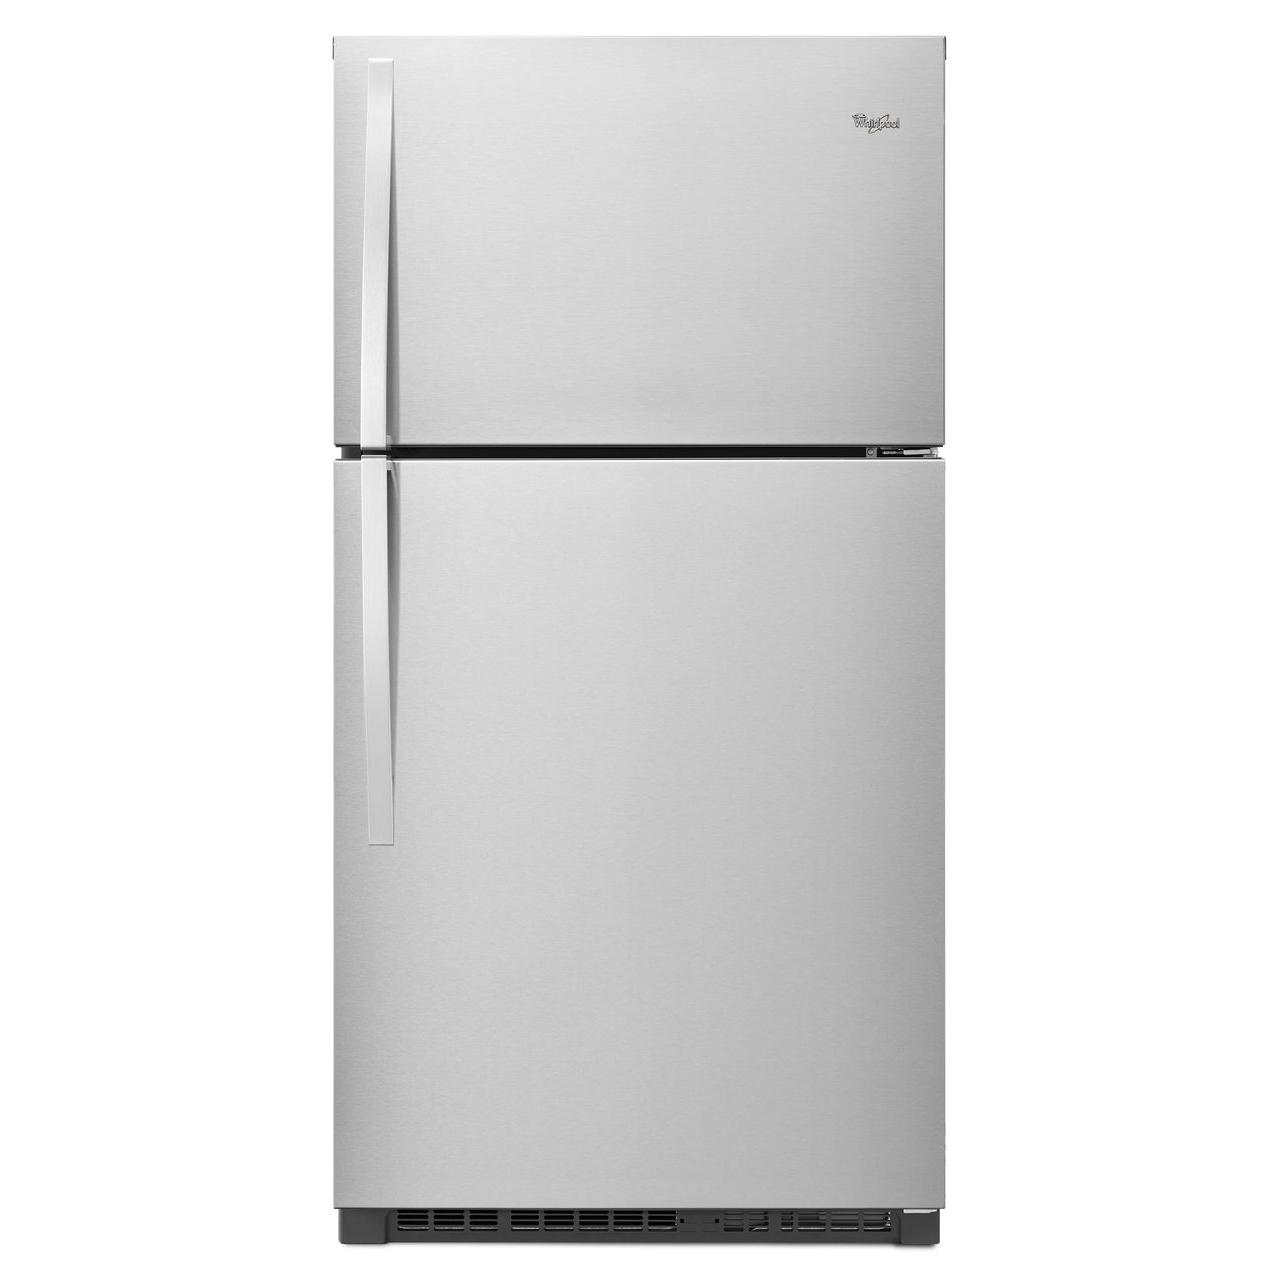 Whirlpool 33-inch, 21.3 cu. ft. Top Freezer Refrigerator with Flex-Slide? WRT511SZDM